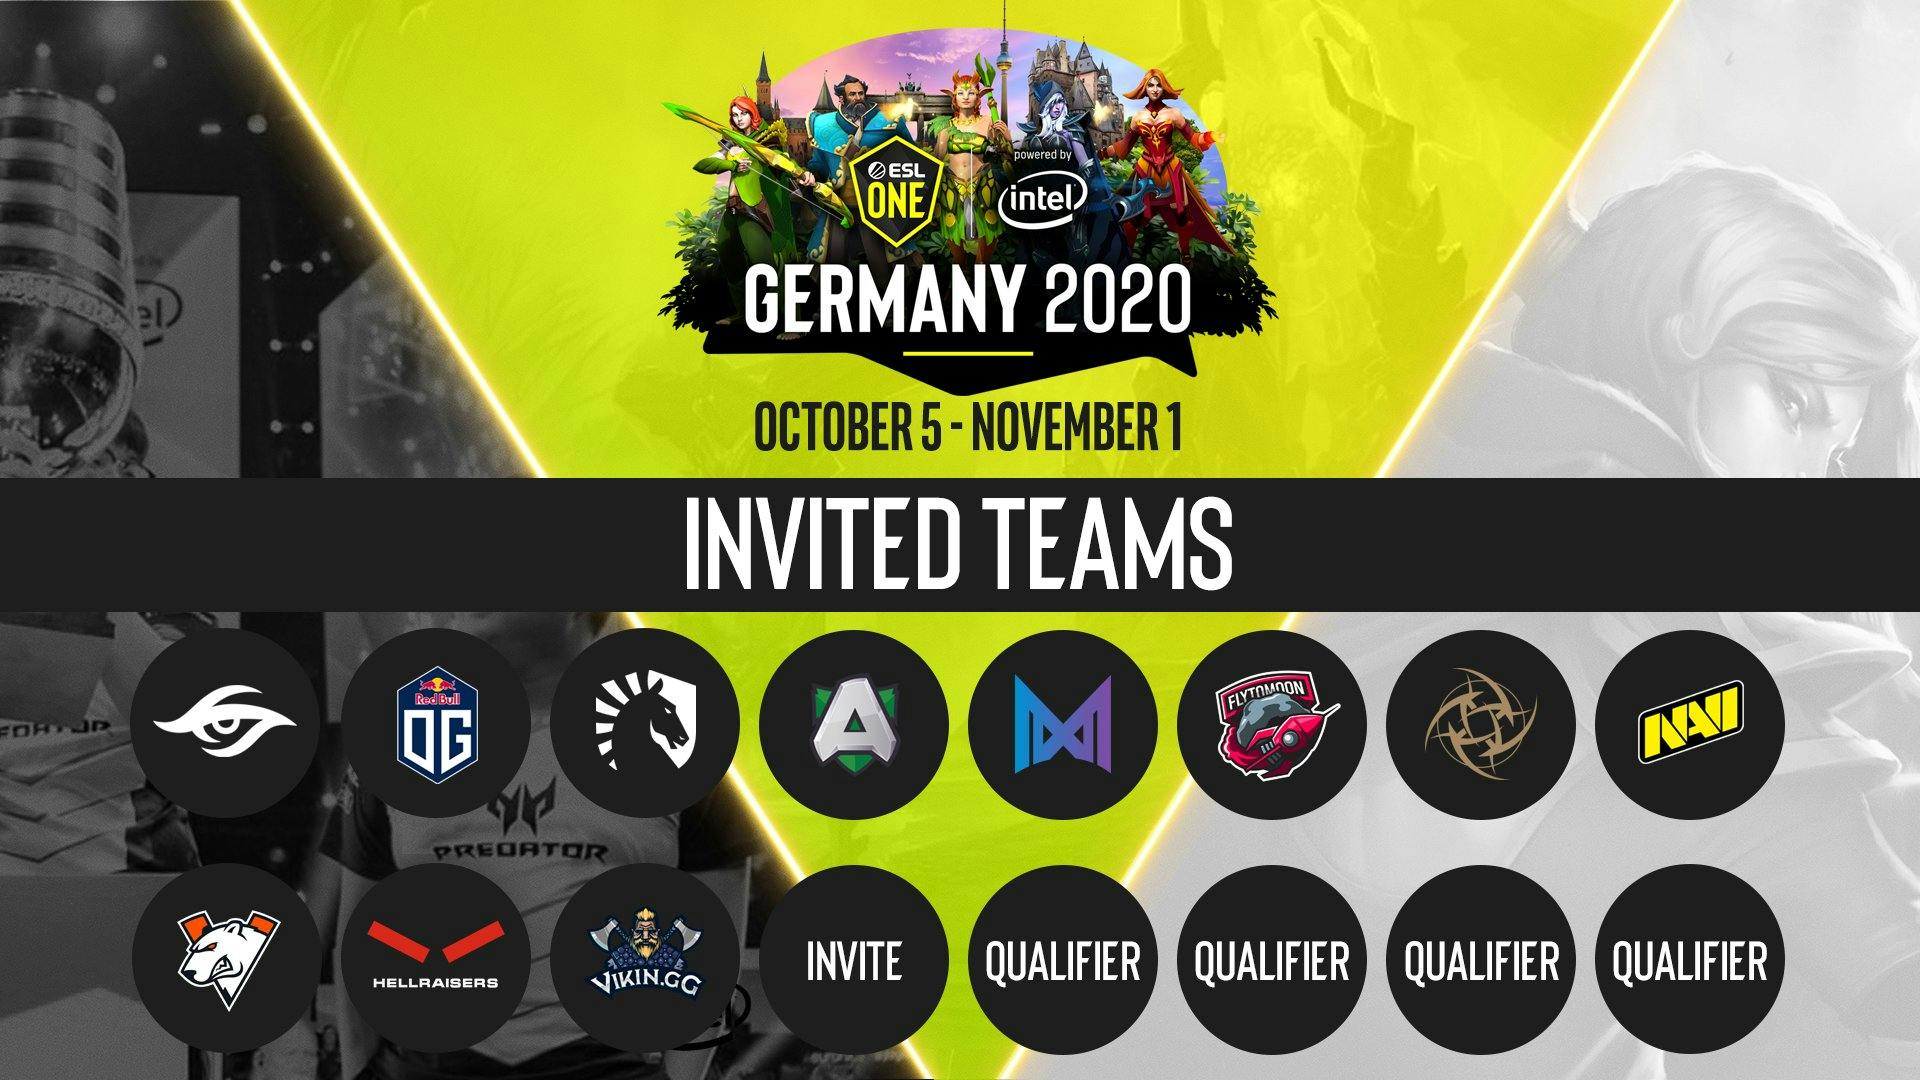 ESL ONE GERMANY 2020 INVITED TEAMS